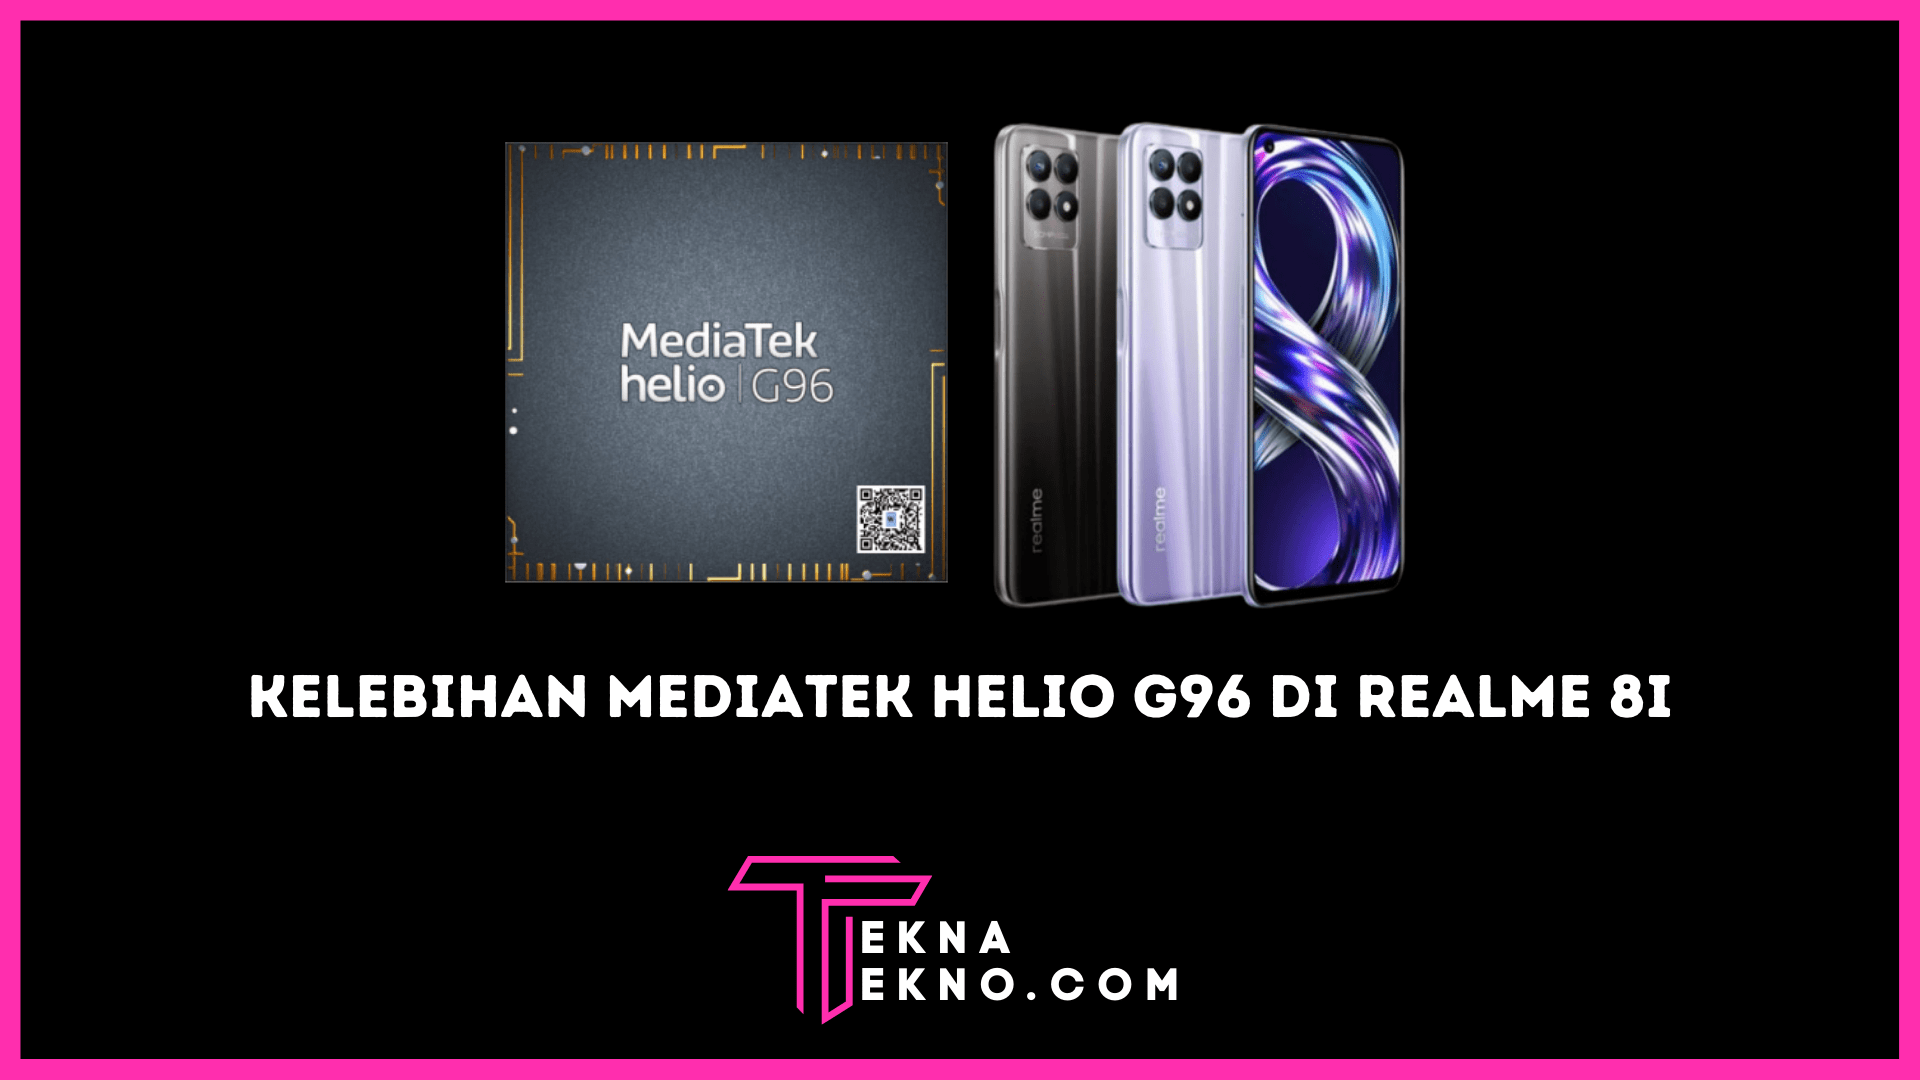 Kelebihan MediaTek Helio G96 yang Dimiliki Realme 8i